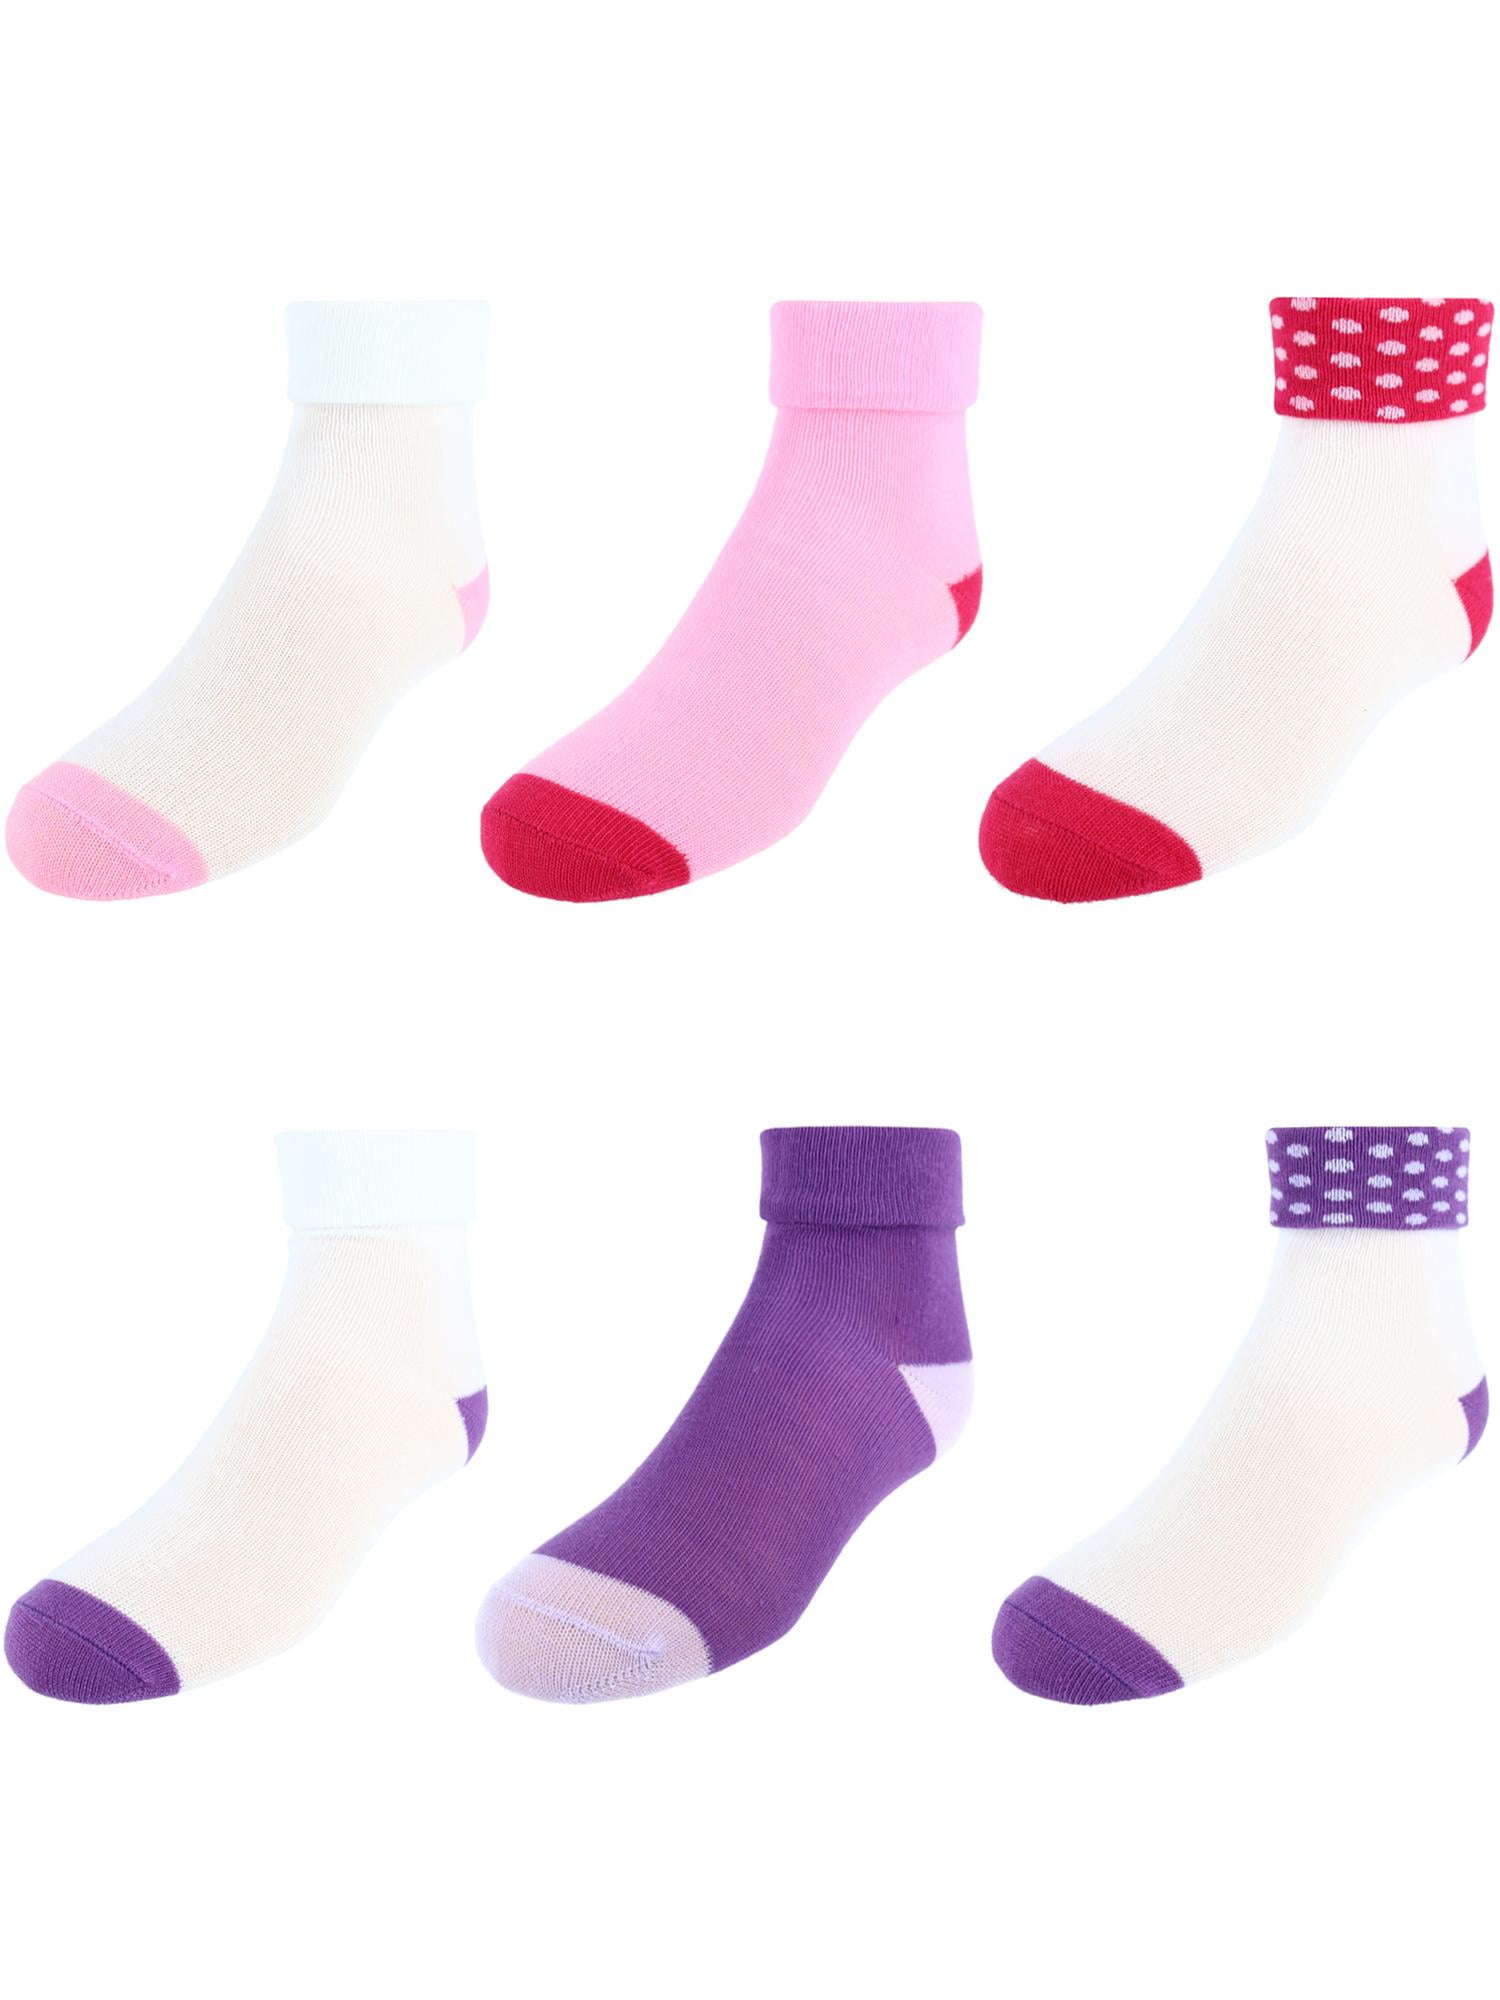 Hanes Toddler Girl Turn-Cuff Socks, 6 Pack, Sizes 6M-5T - Walmart.com